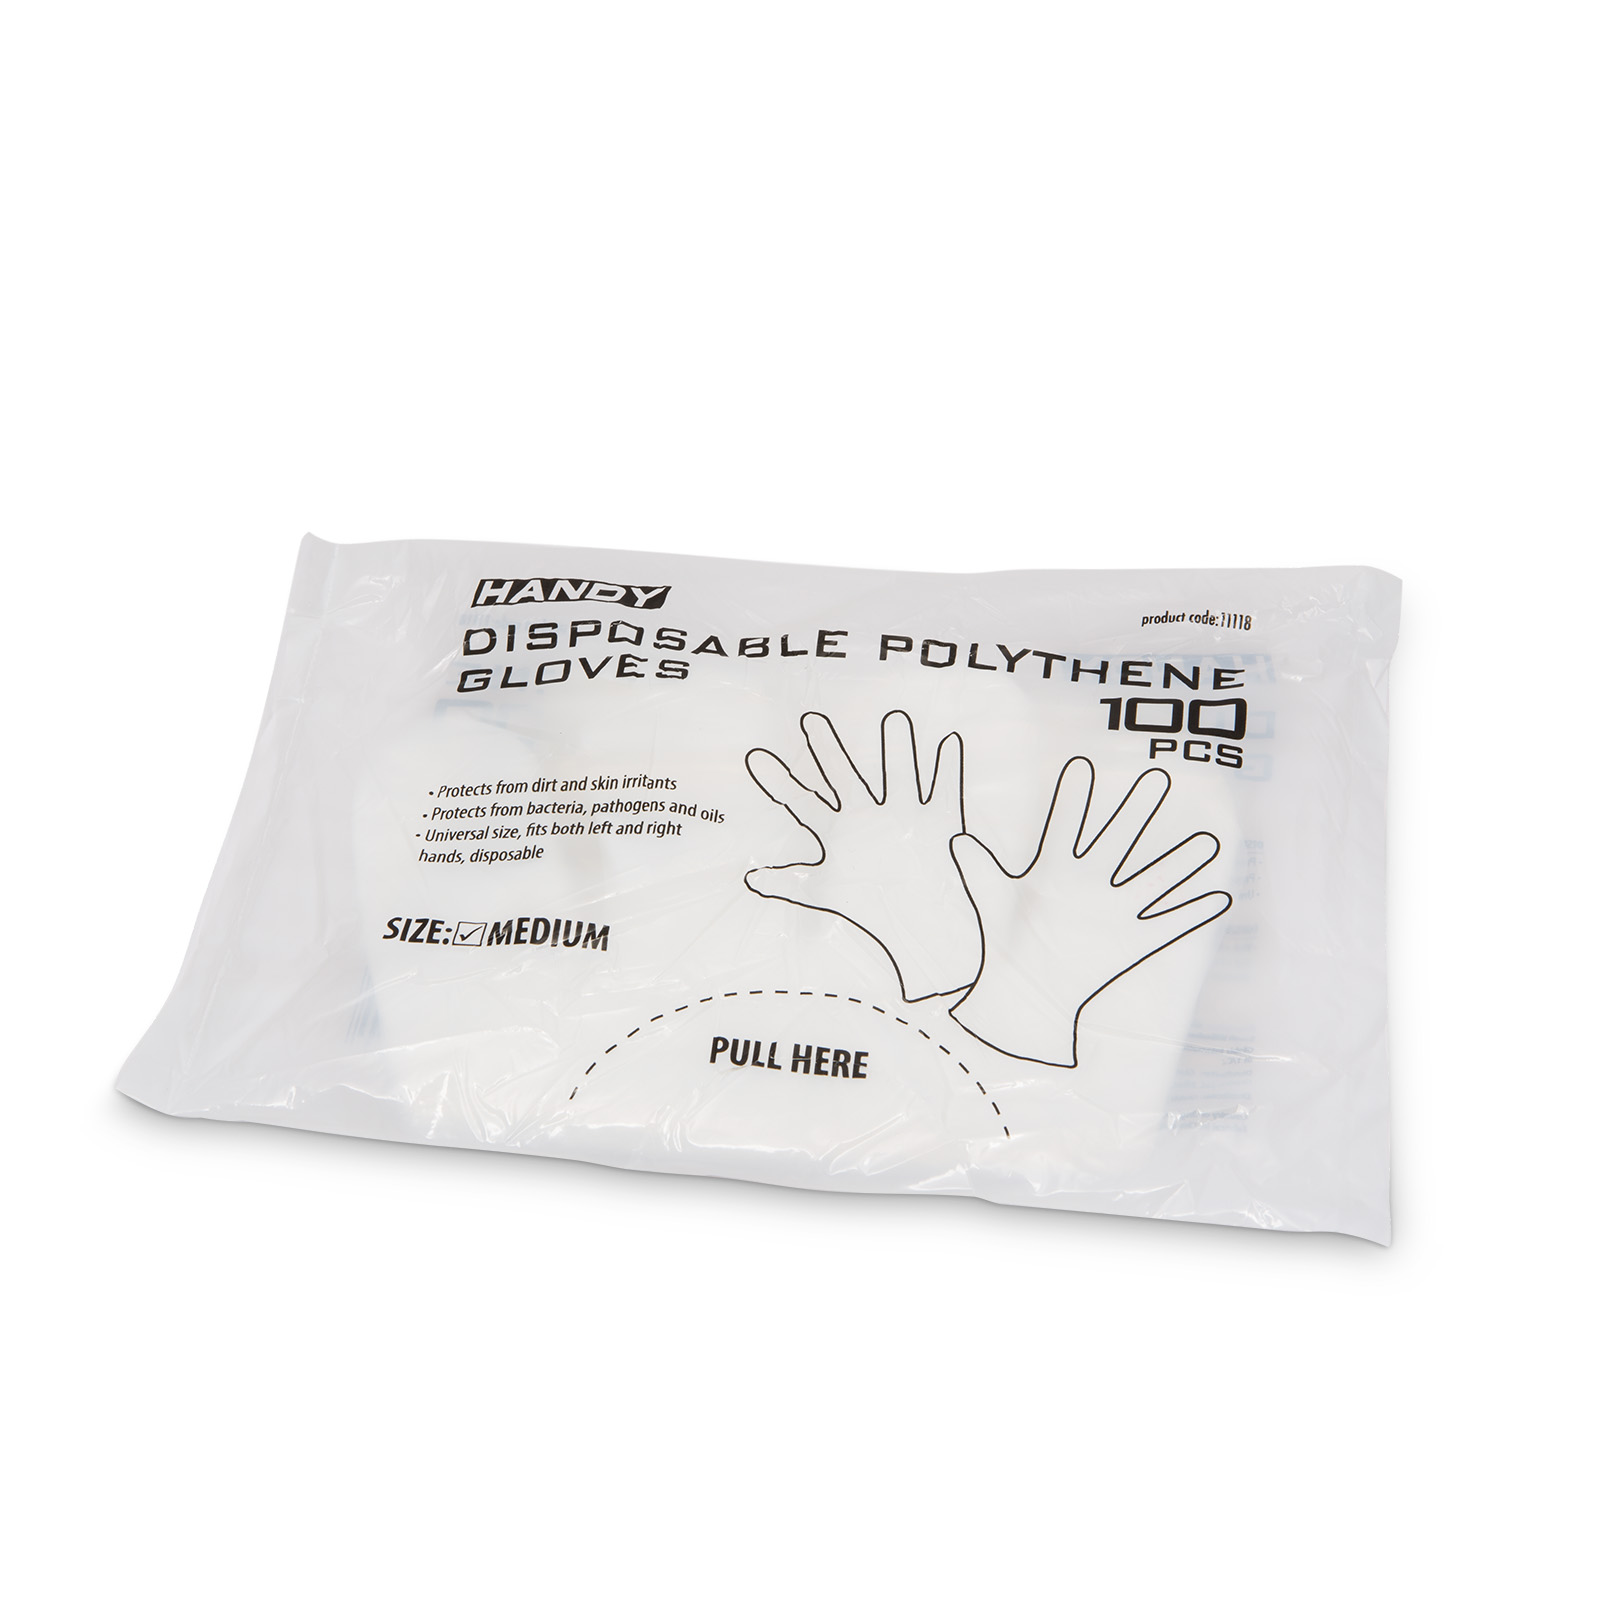 Disposable Polythene Gloves thumb